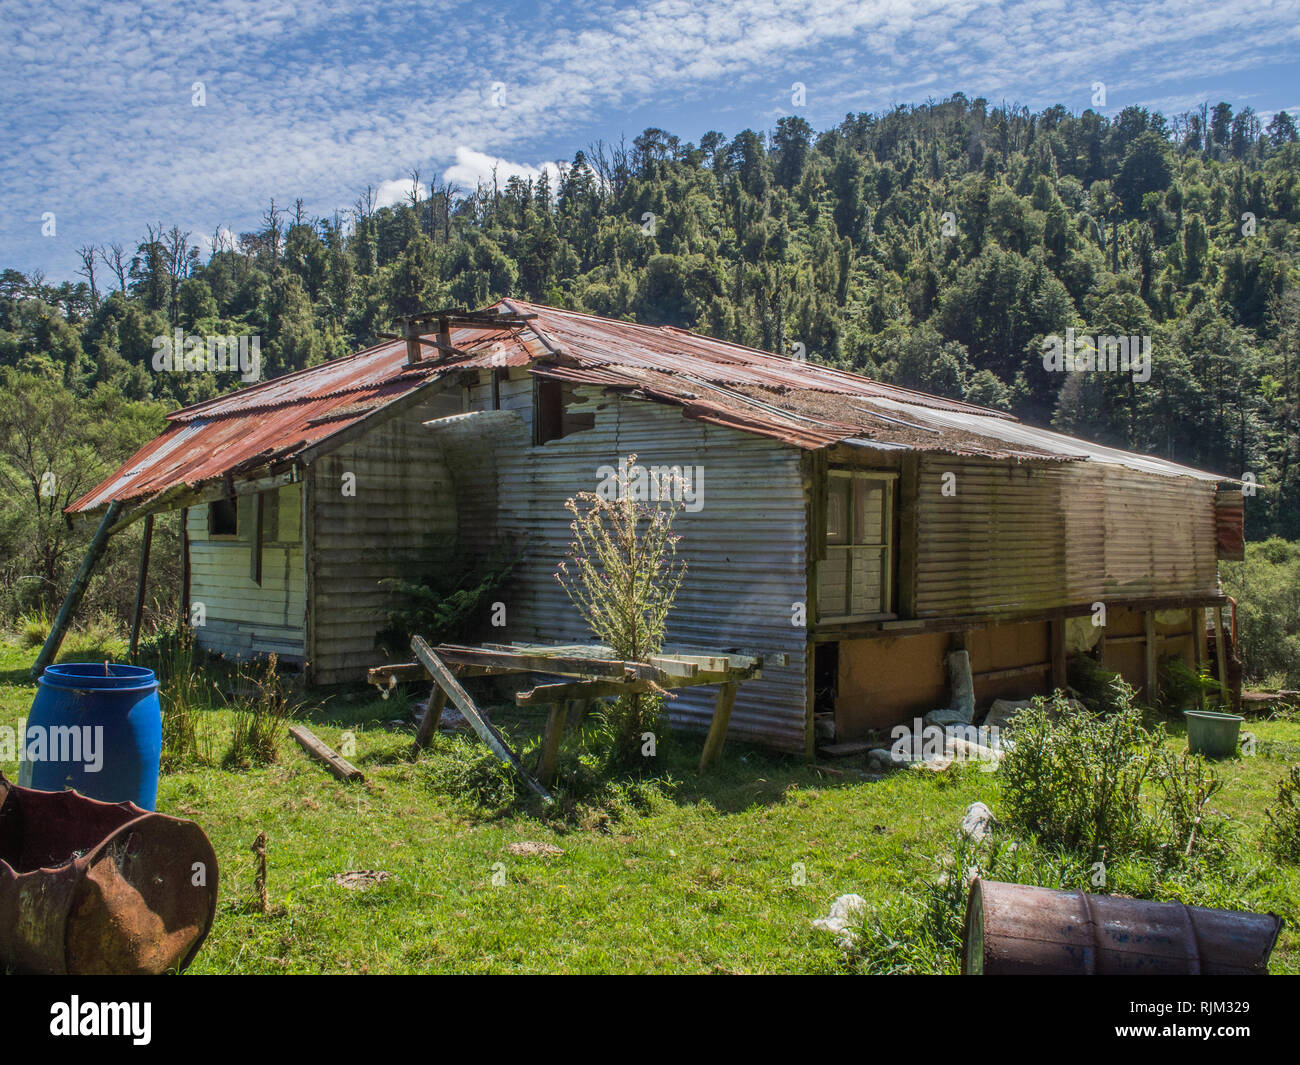 Edgecumbe Homestead, casa abbandonata, foresta nativa bush clad hills, Ahuahu Valley, Whanganui River, Nuova Zelanda Foto Stock